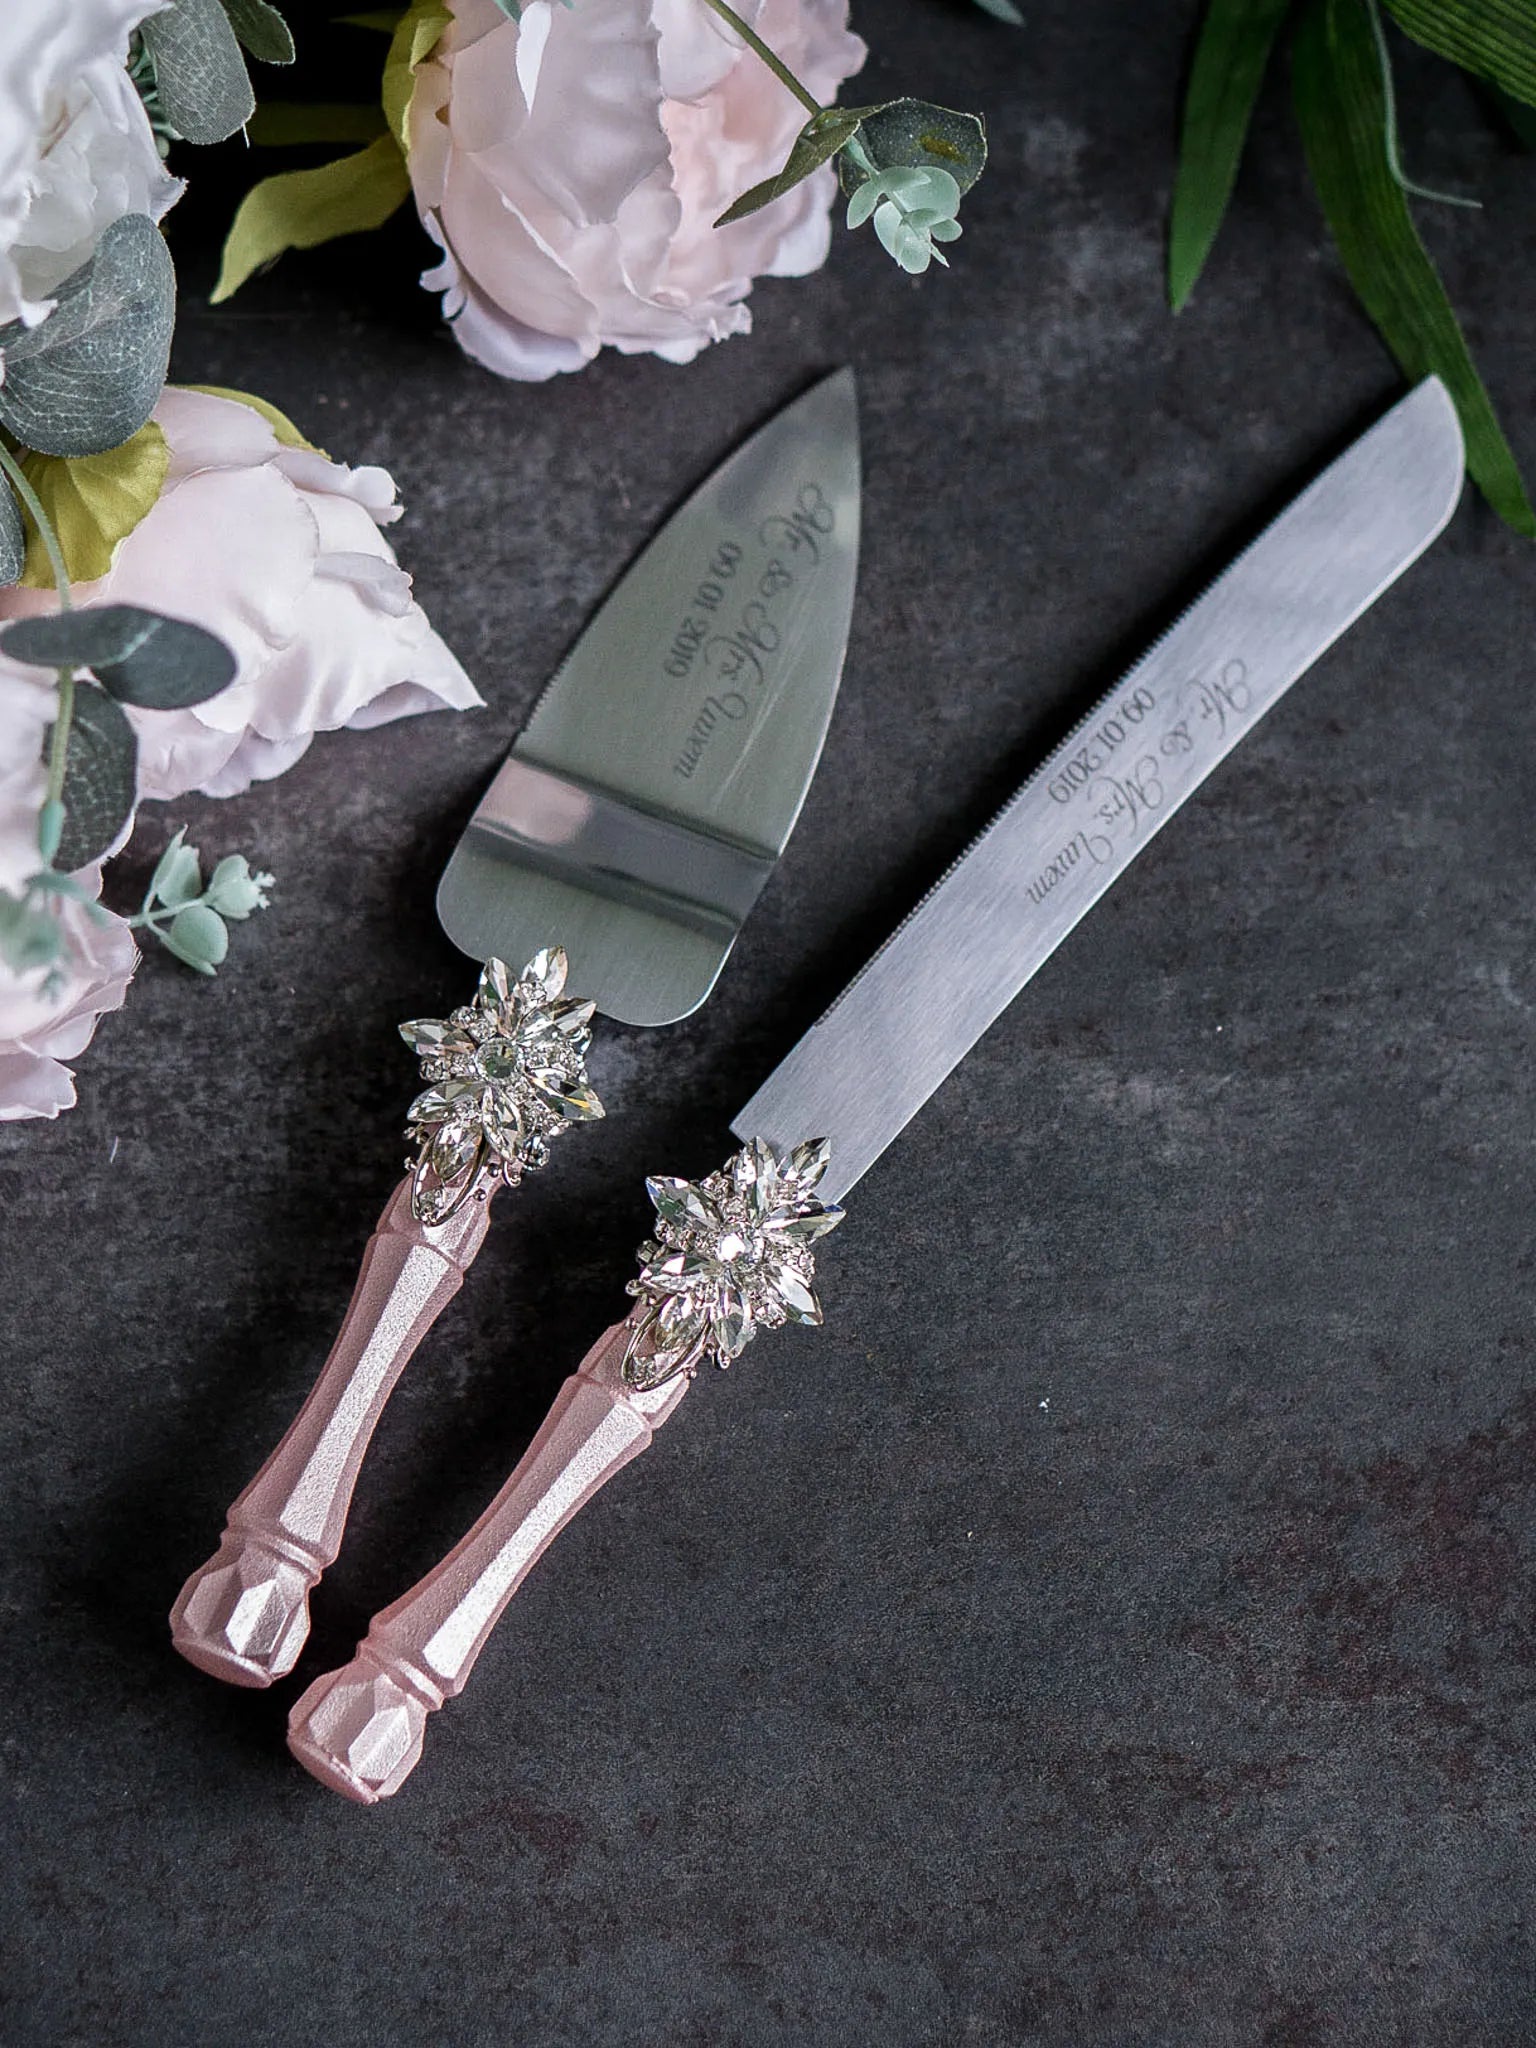 Engraved rose gold and silver crystal cake knife set